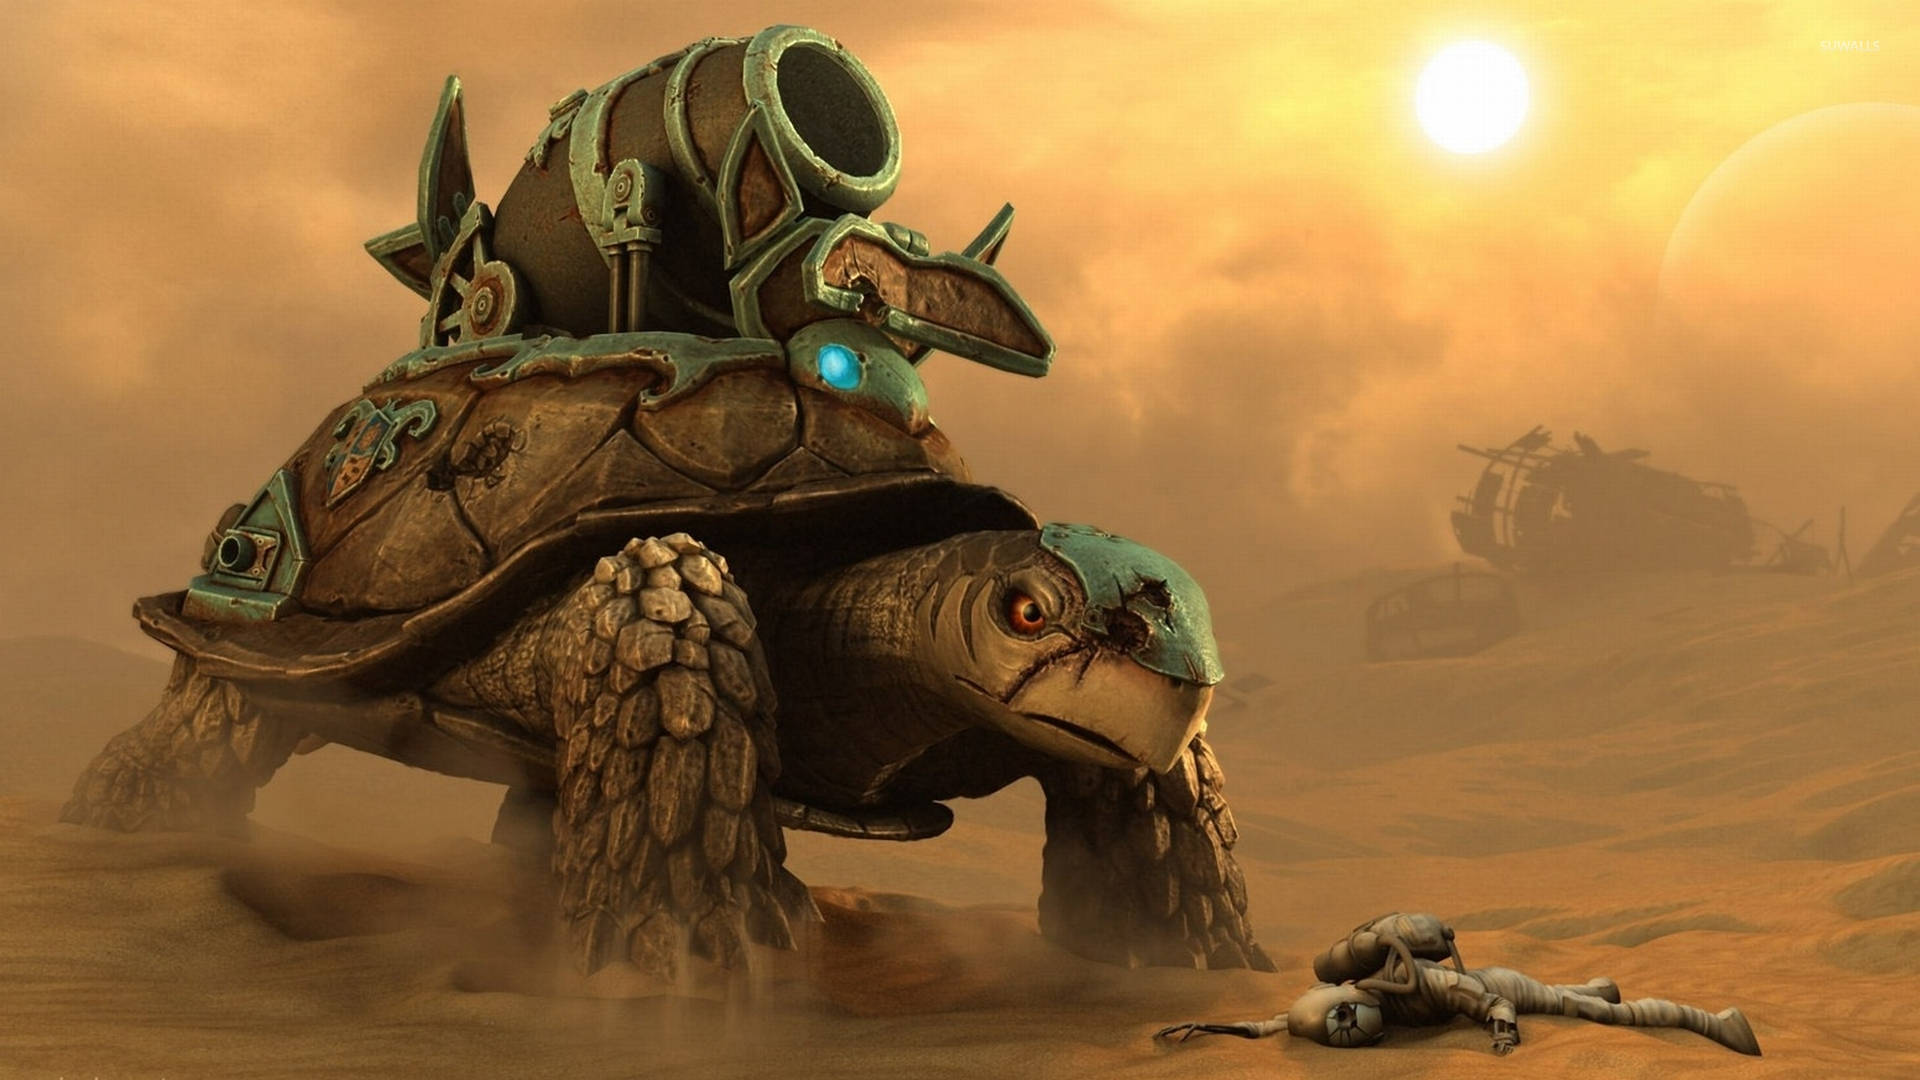 Cool Turtle Fantasy In Desert